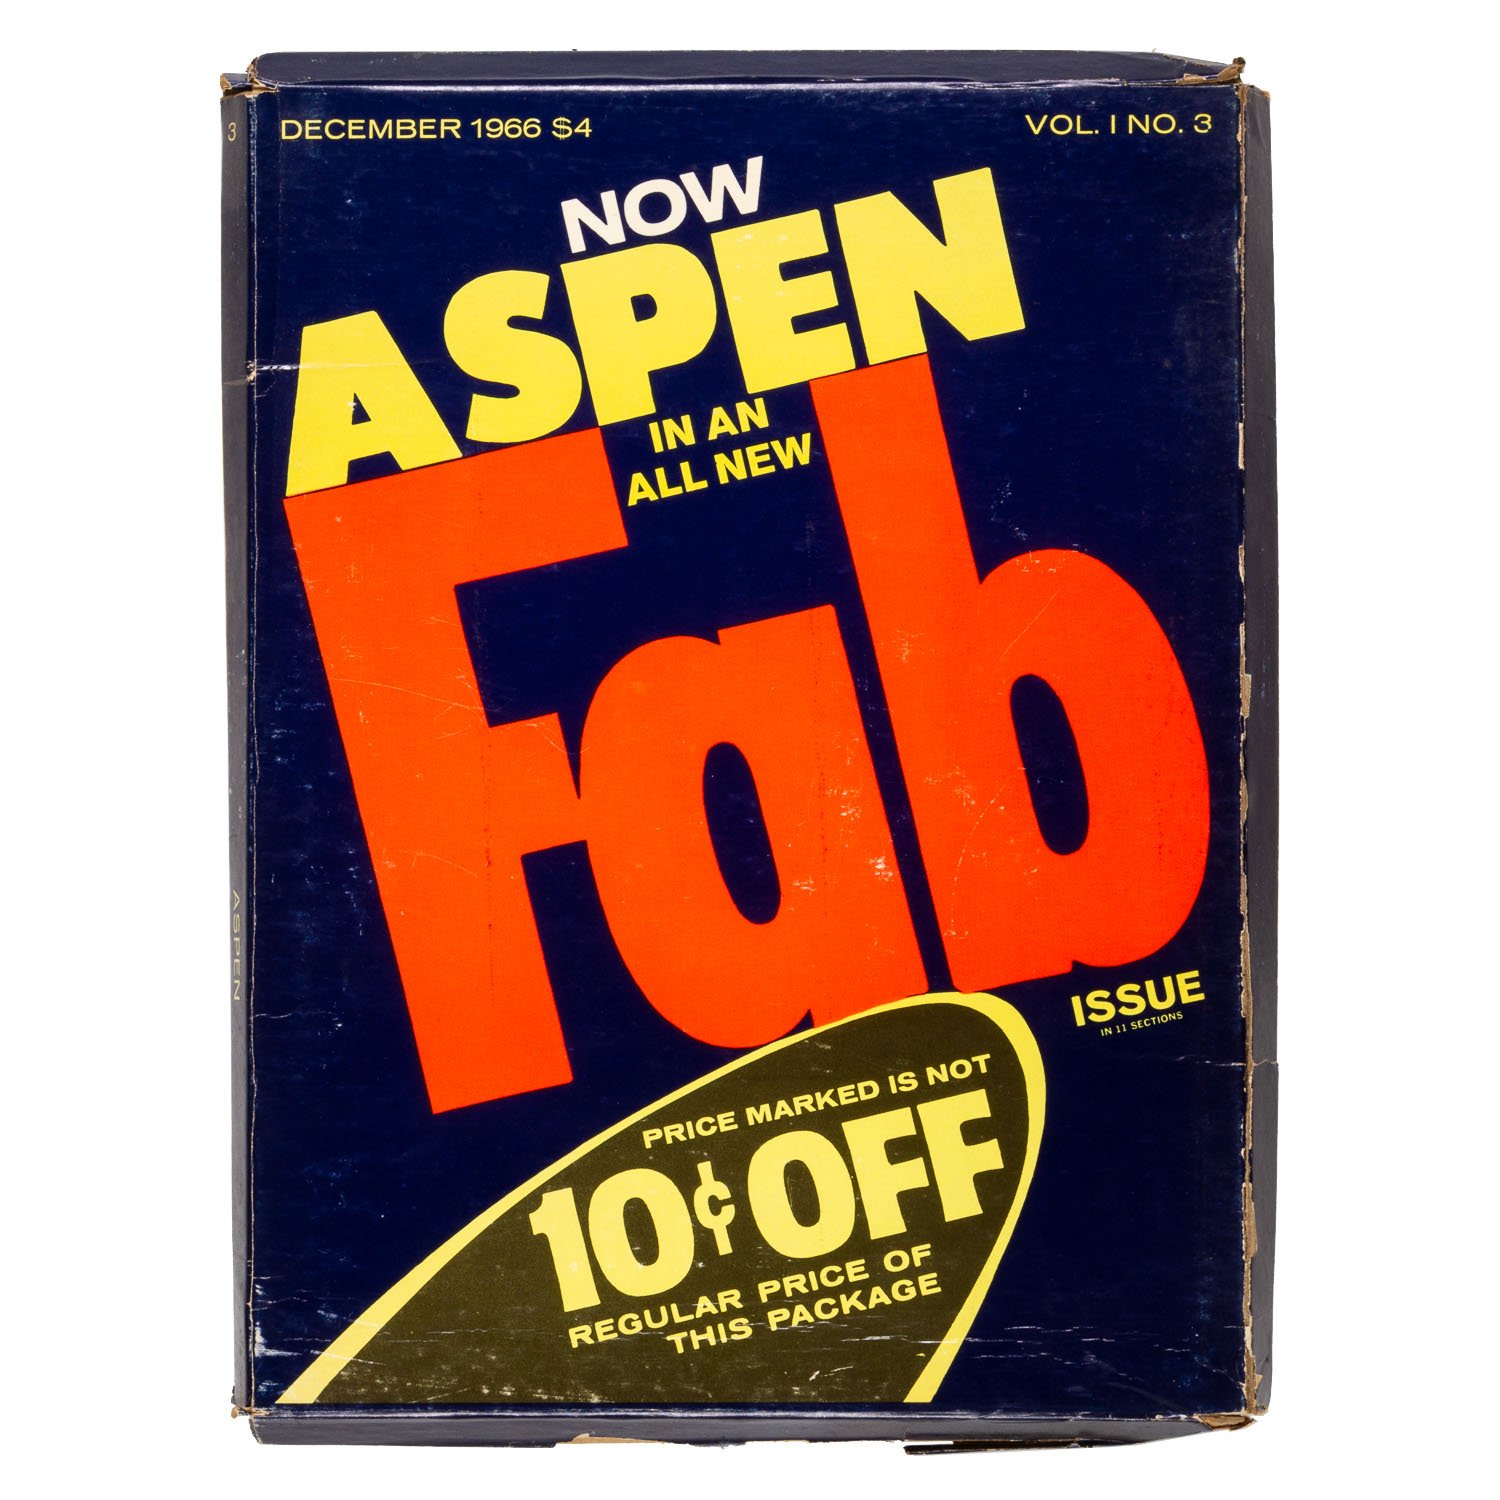 [WARHOL] Aspen : the magazine in a box. Vol. 1, No. 3, ‘The Pop Art Issue’.